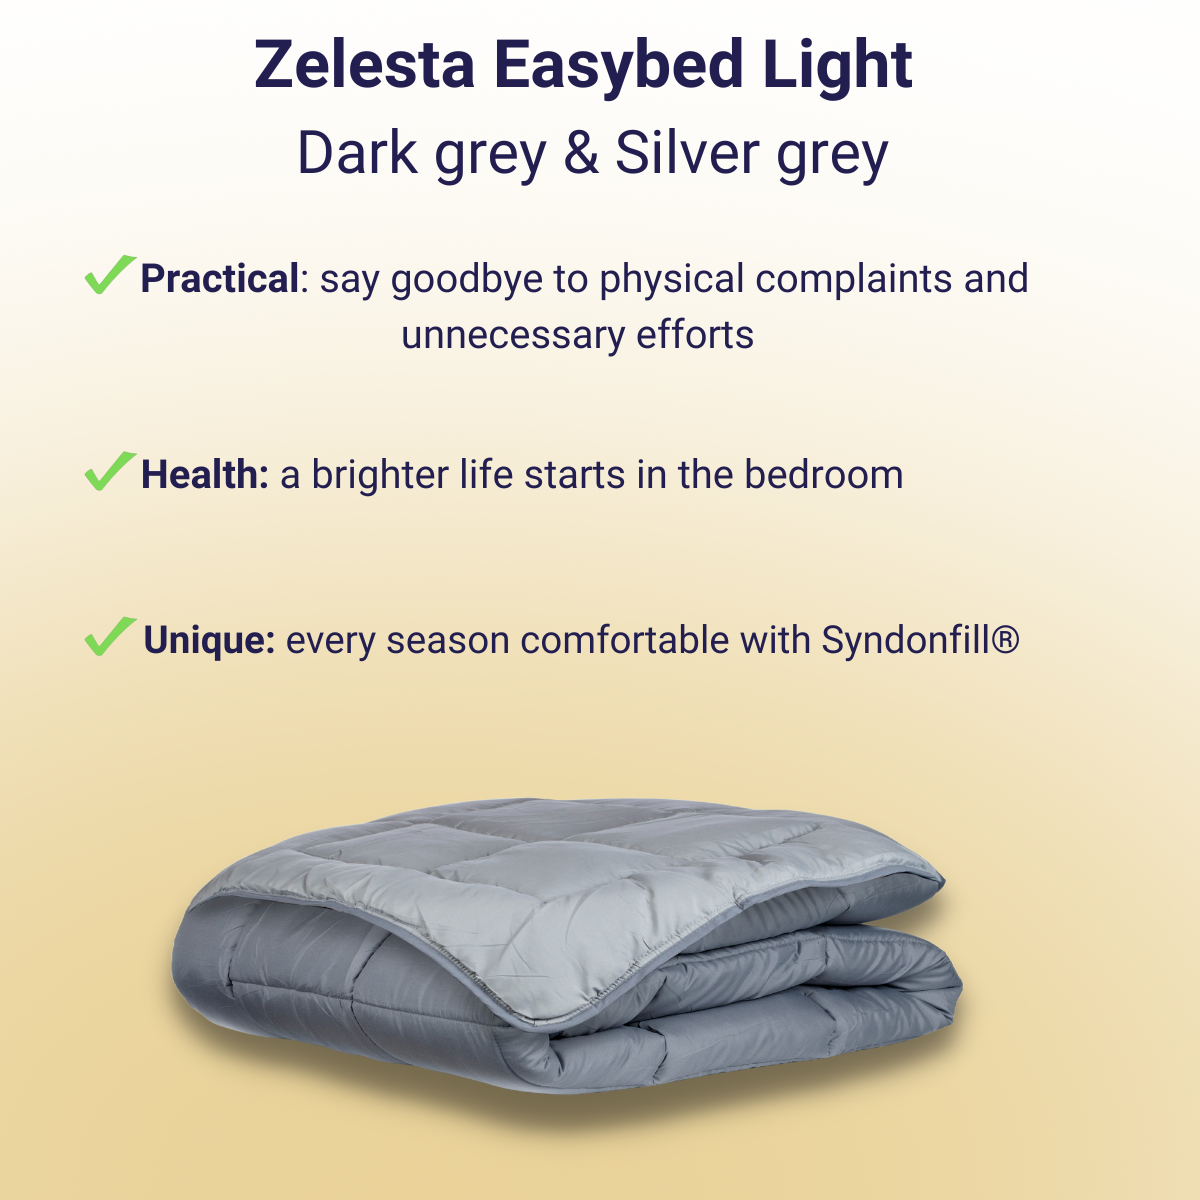 Zelesta Easybed Light - Dark Grey & Silver Grey